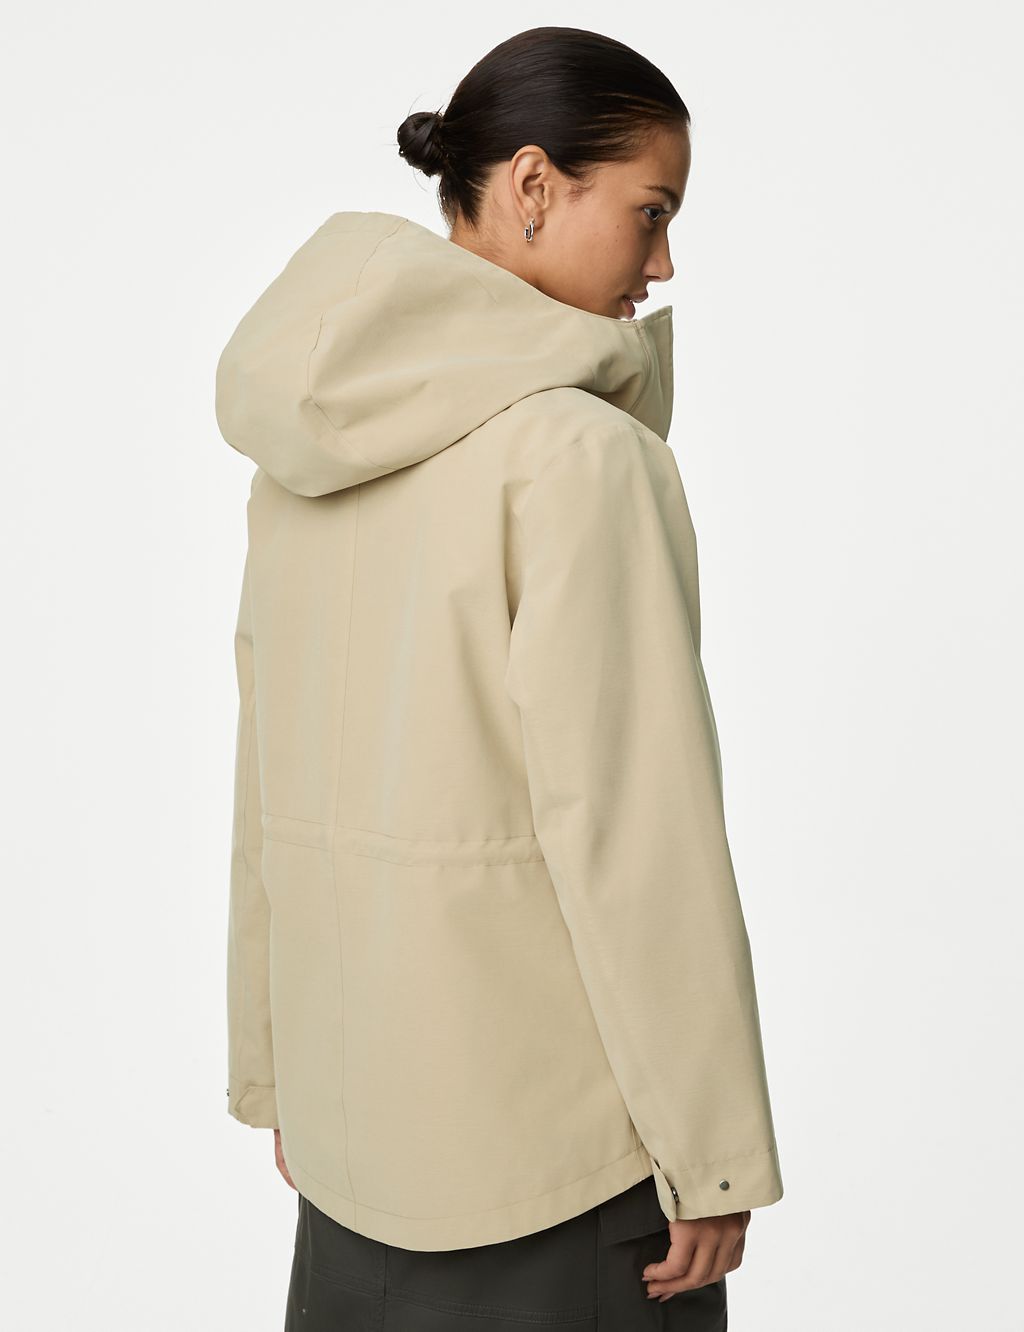 Stormwear™ Hooded Rain Jacket with Cotton 4 of 7